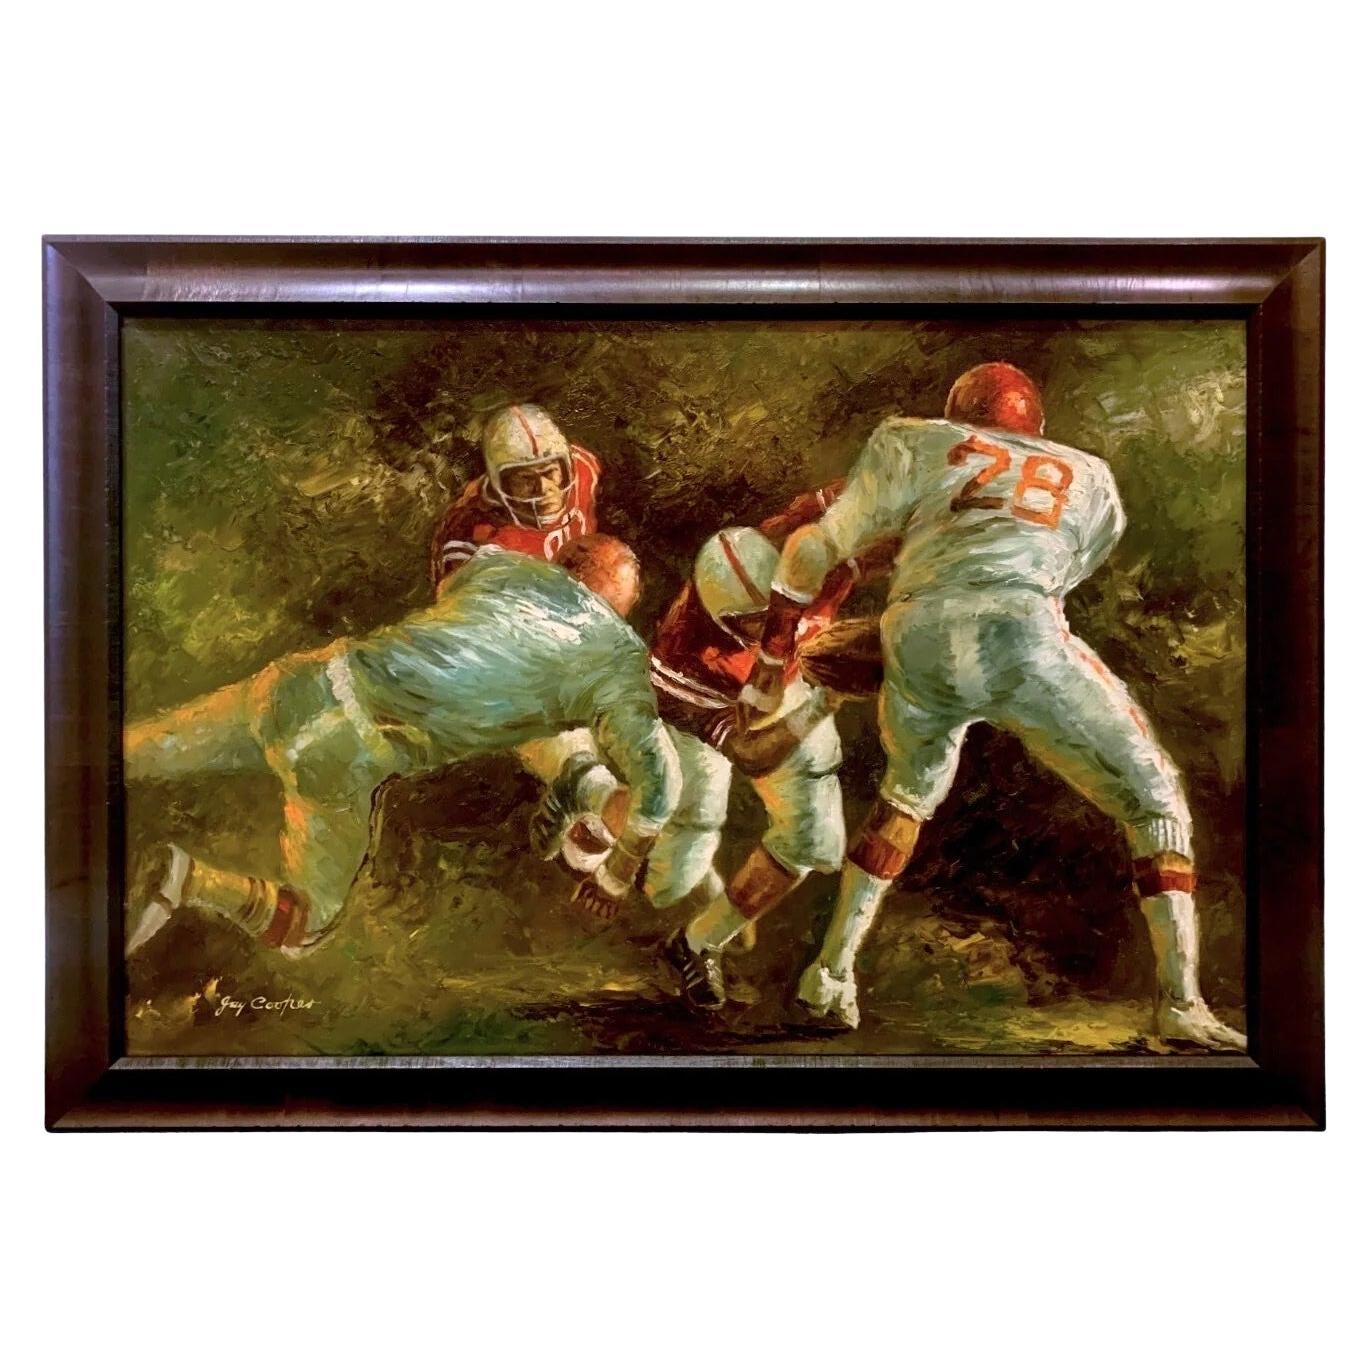 Football-Szene von Jay Cooper, Öl auf Leinwand, spätes 20. Jahrhundert